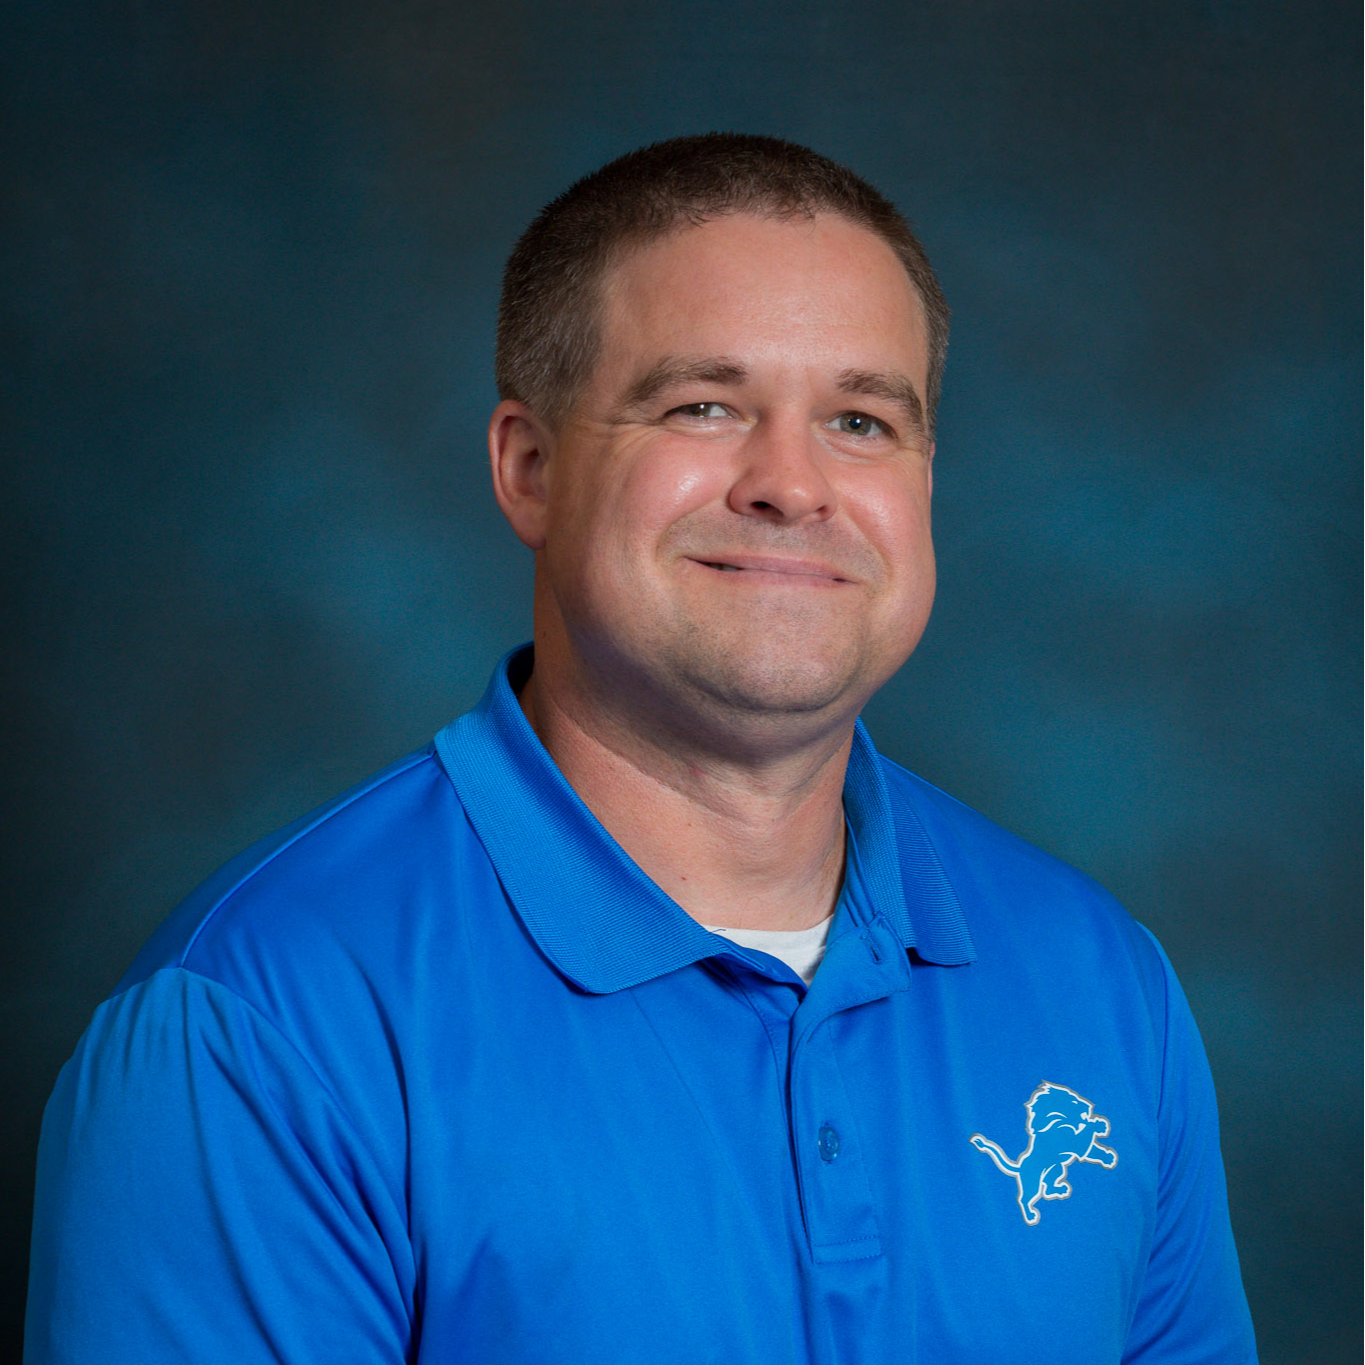 Portrait of Scott Moore wearing a blue polo shirt